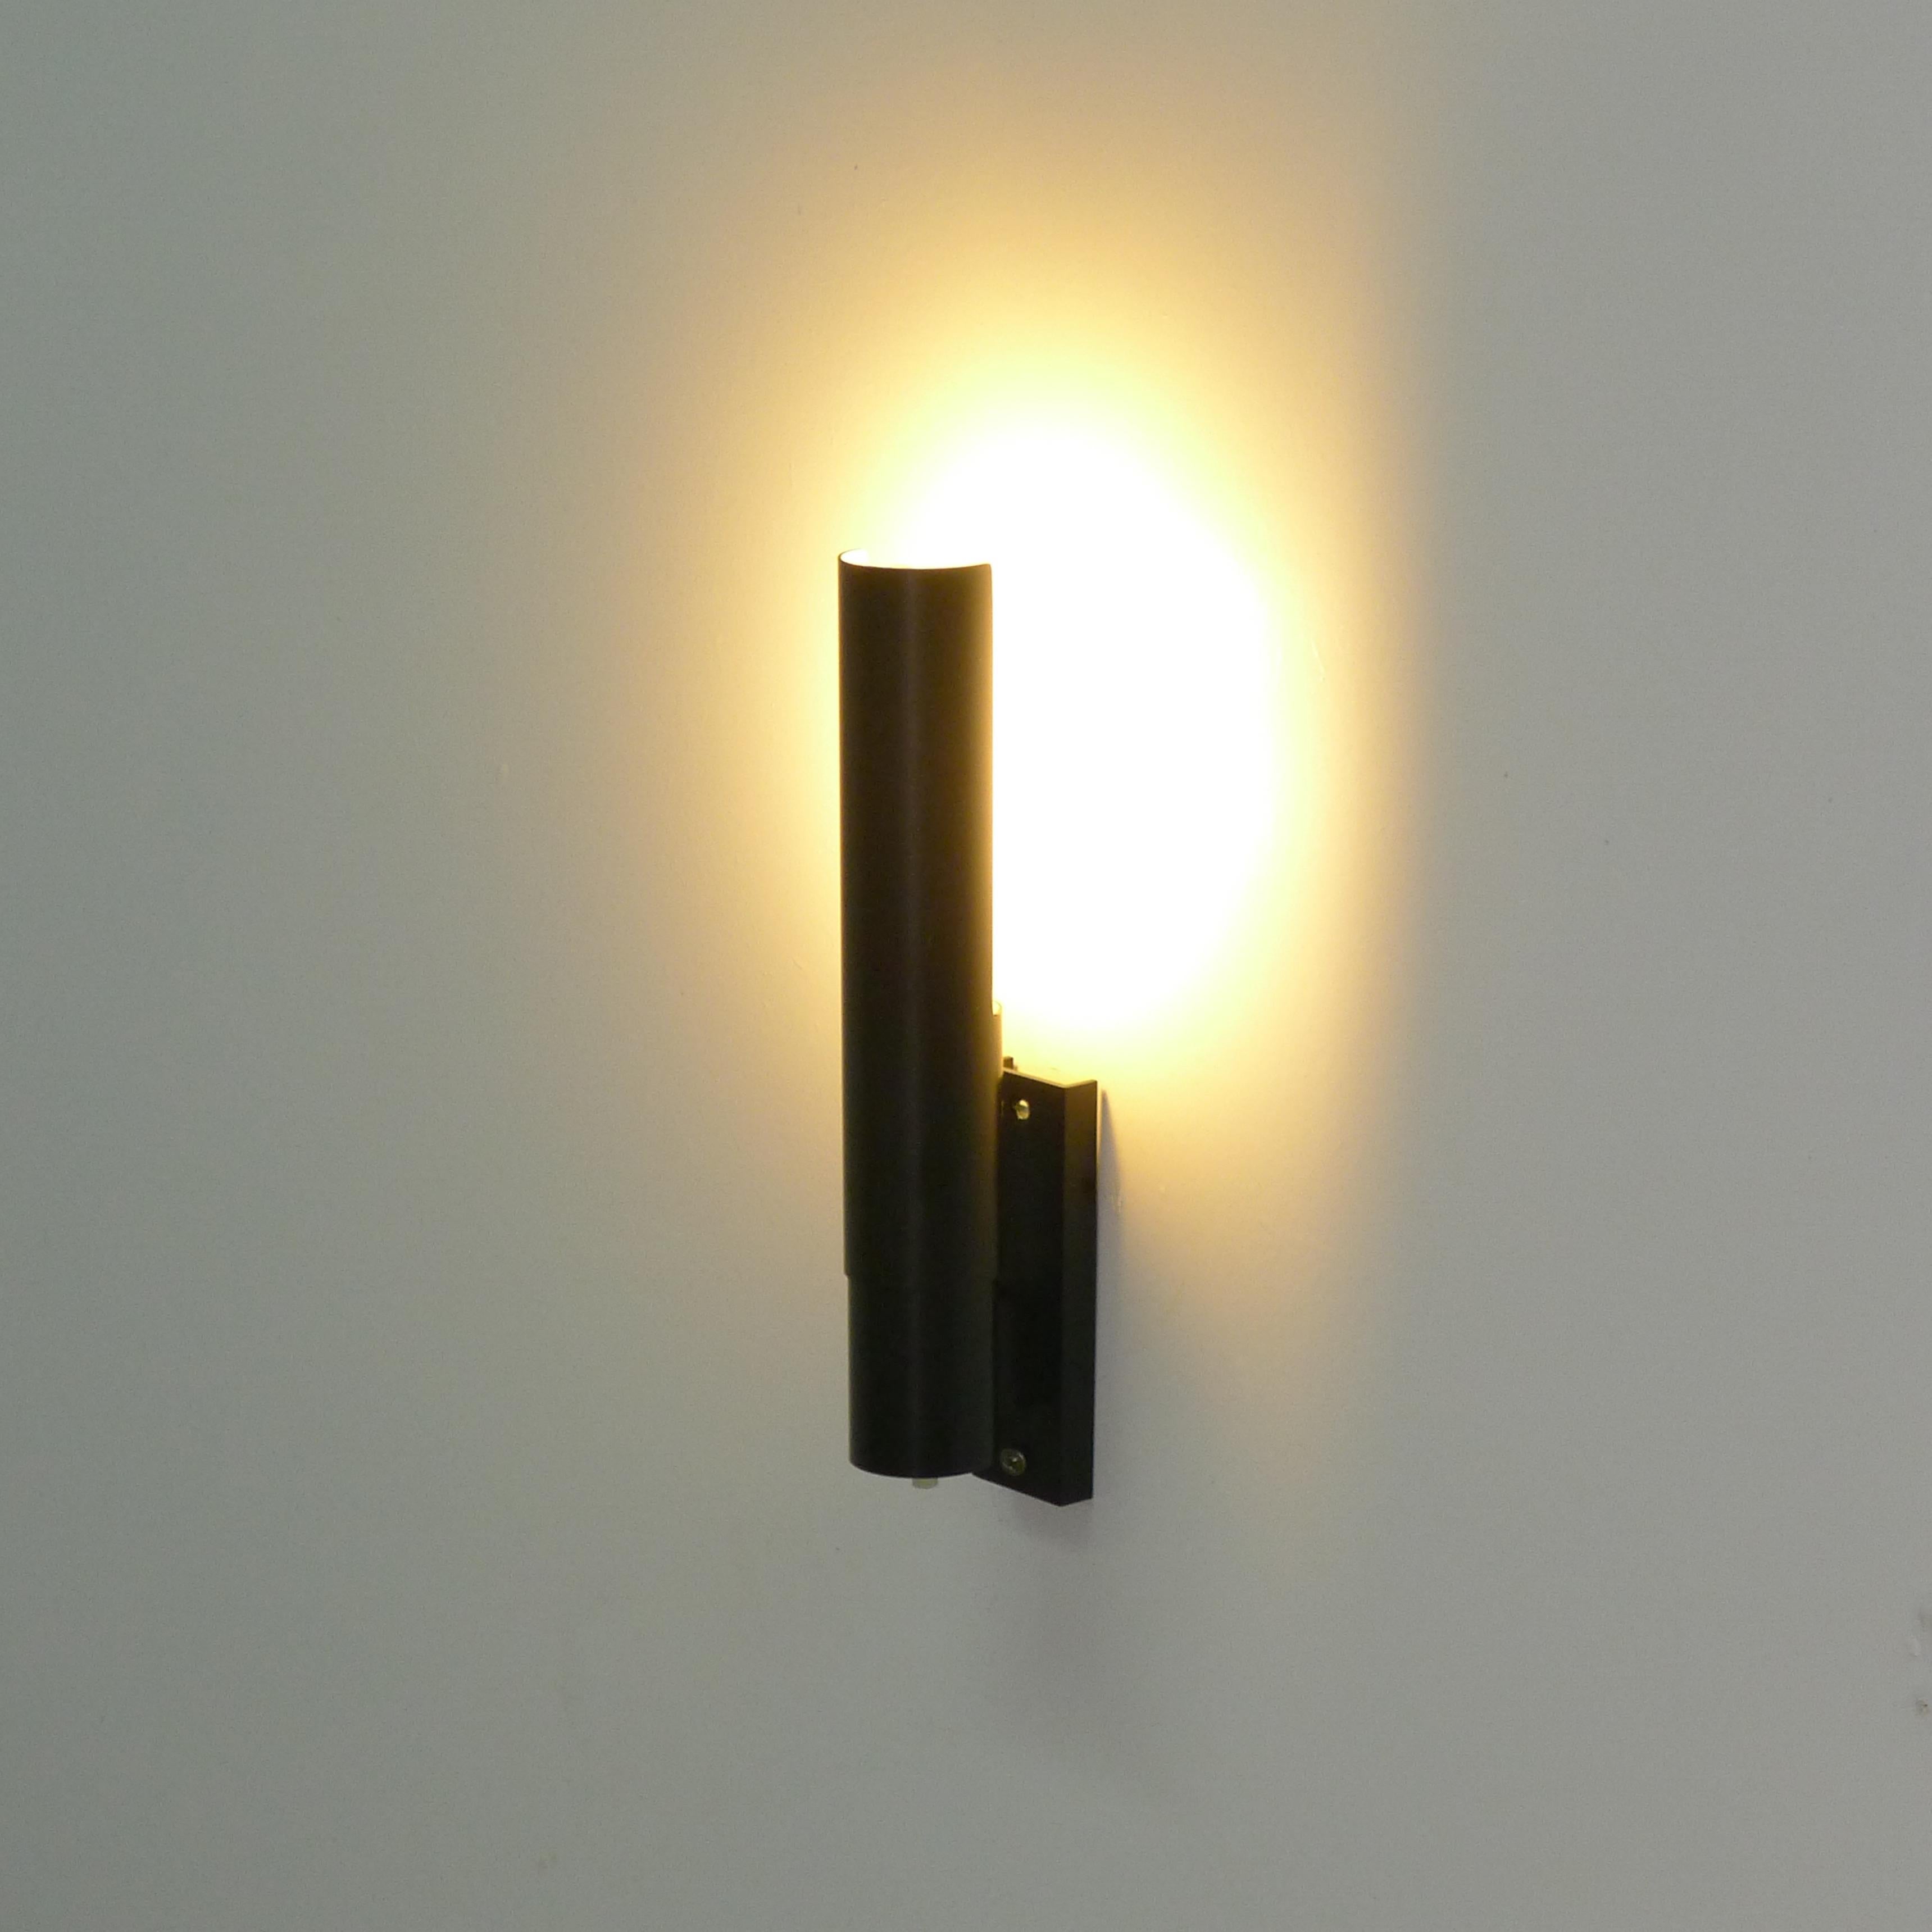 Gino Sarfatti, Wall Light, model 211, designed 1955, made by Arteluce 1950s For Sale 2